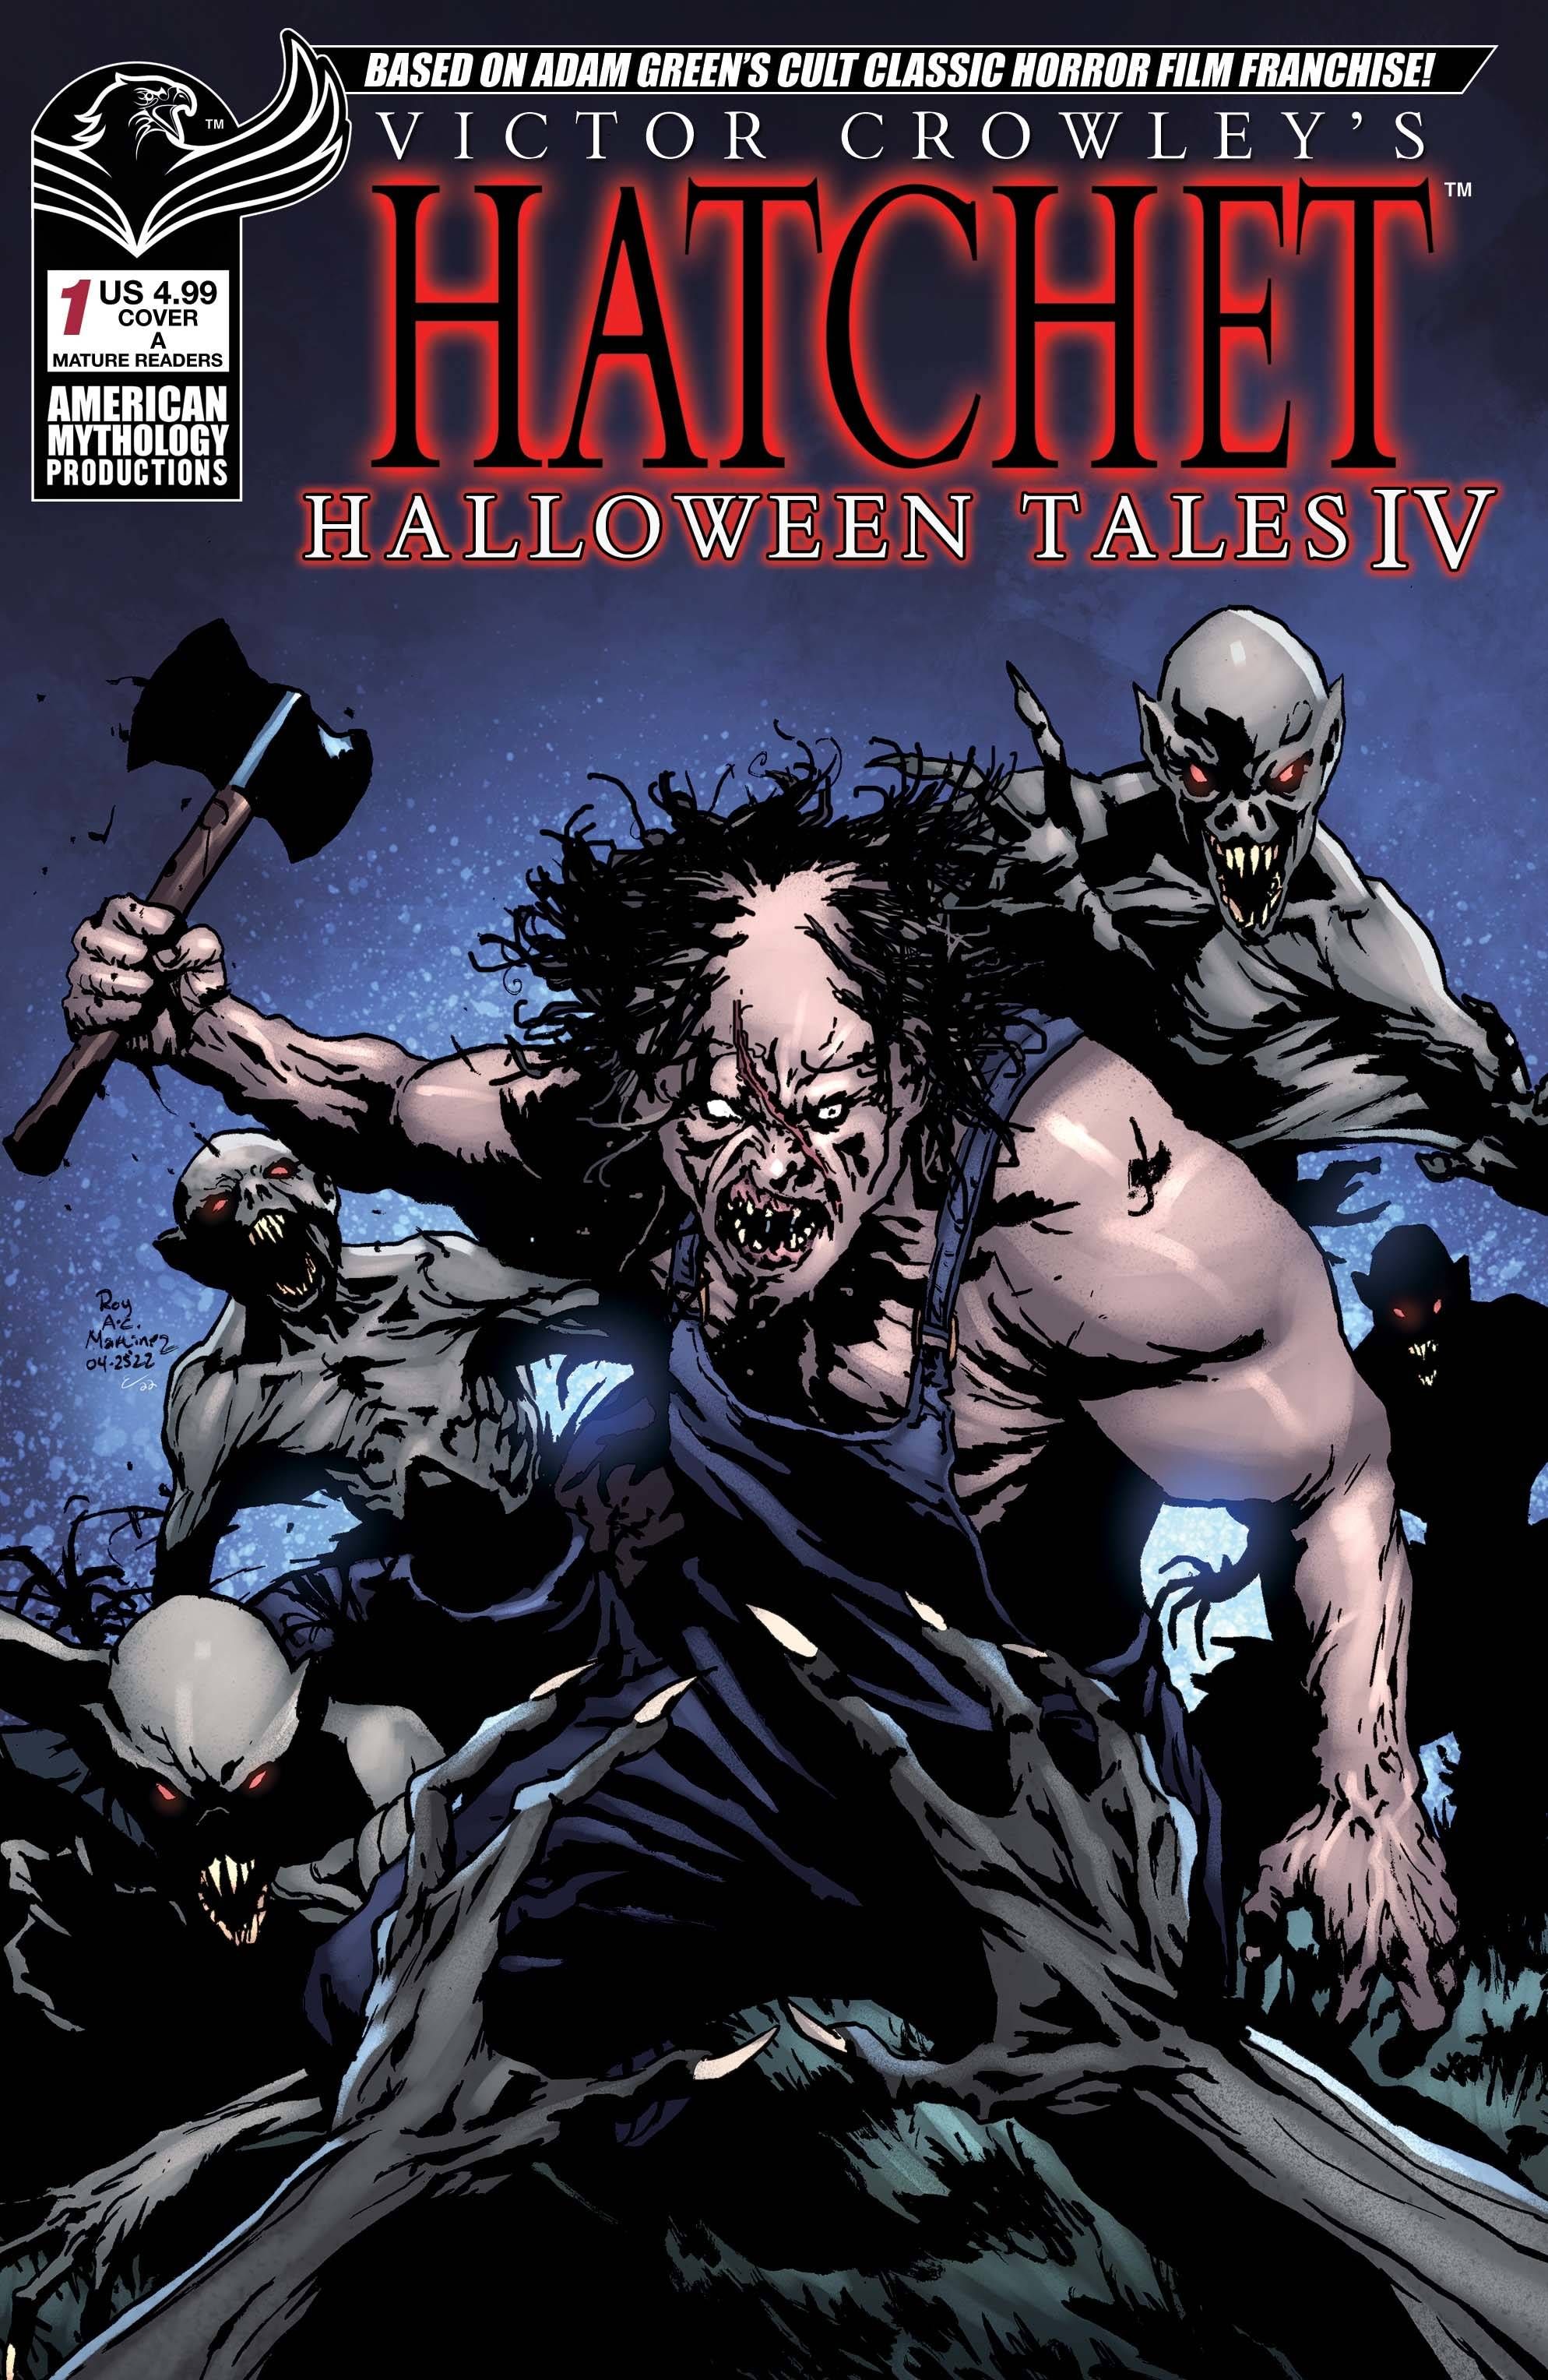 Victor Crowley's Hatchet: Halloween Tales IV Comic